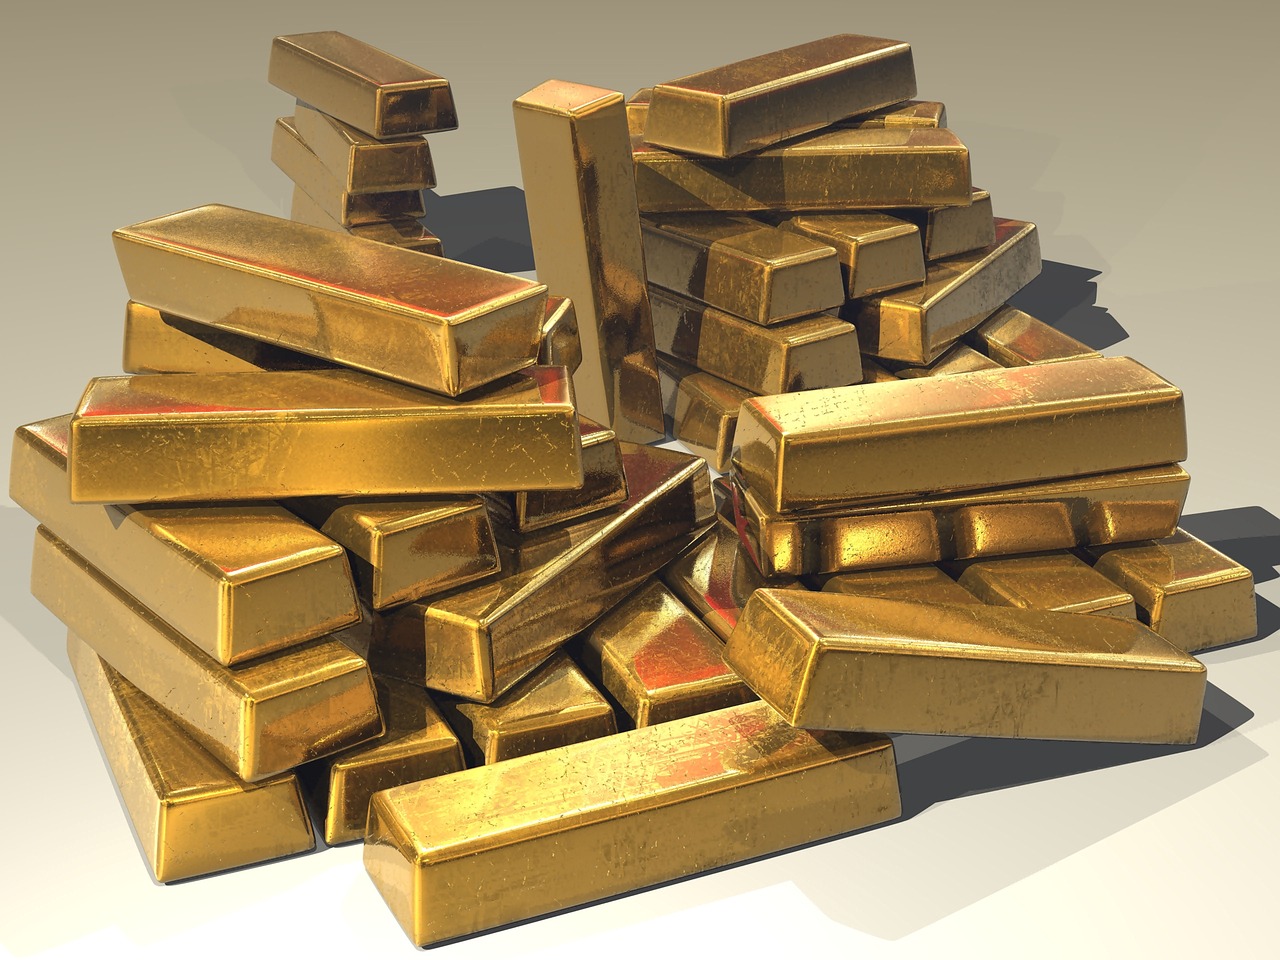 Gold - Gold bullion stacked by Steve Bidmead via Pixabay